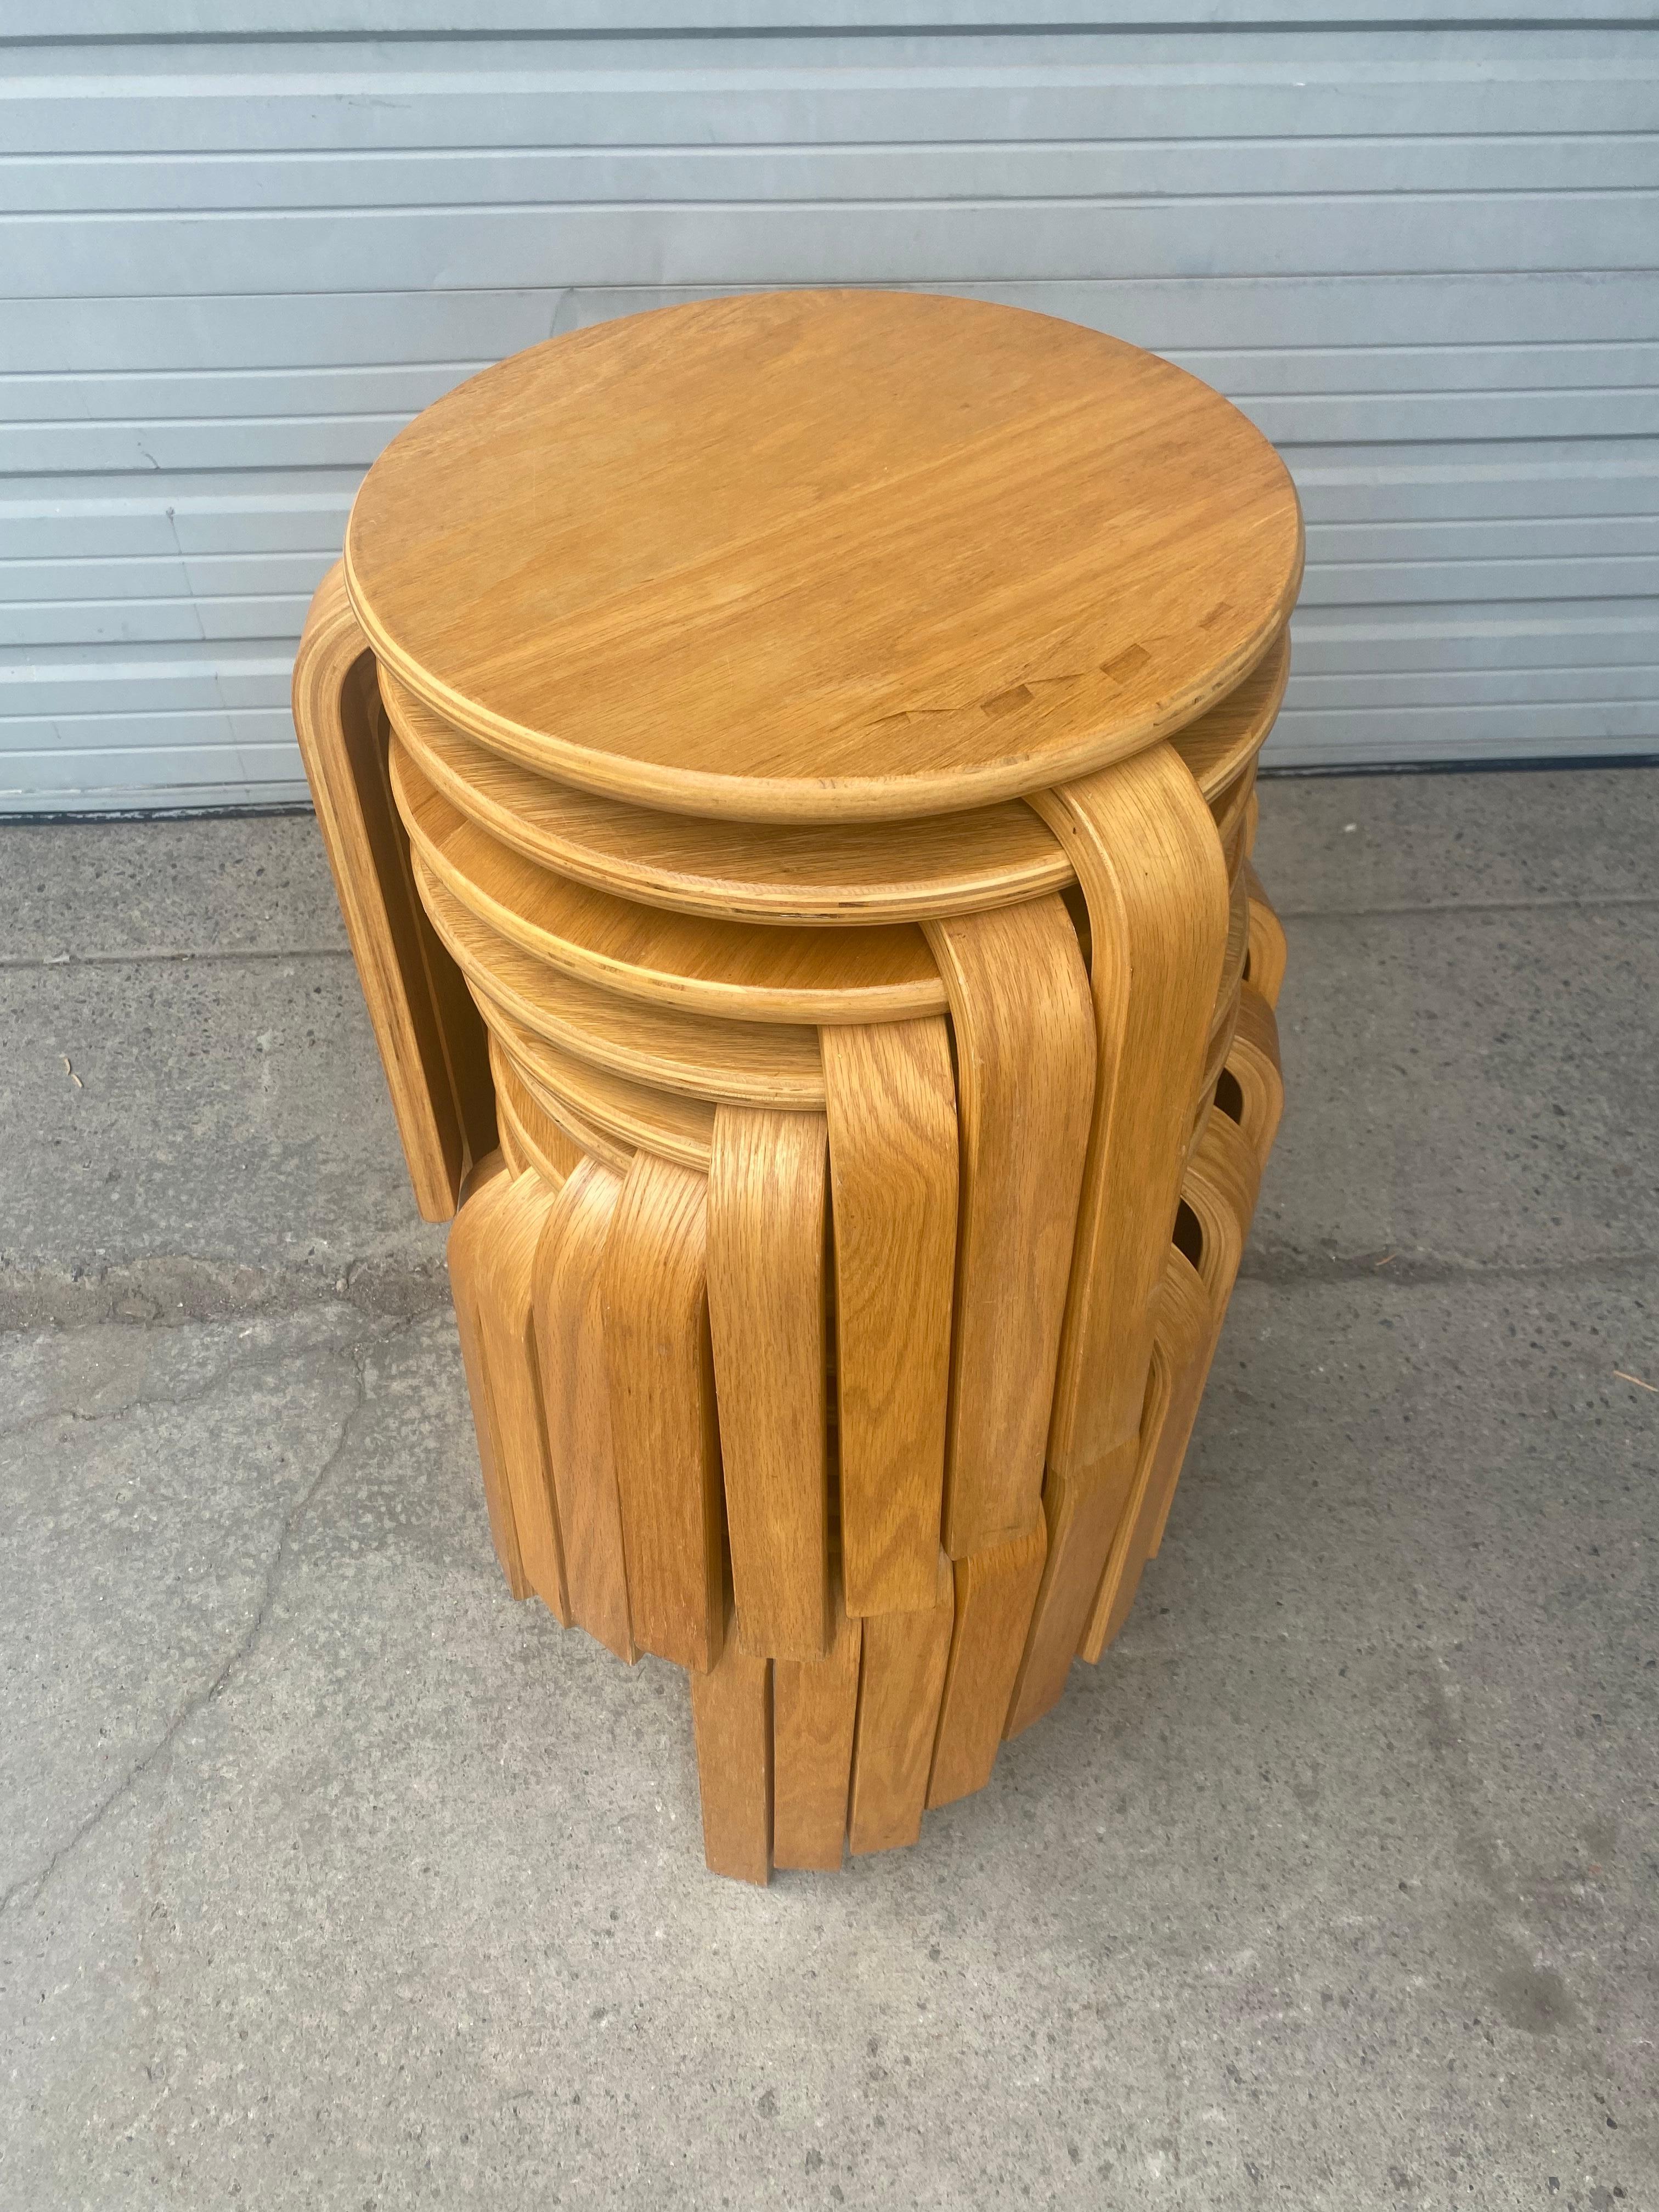 Late 20th Century Alvar Aalto Style 3-Leg Plywood Stool / Table, Classic Modernist Design